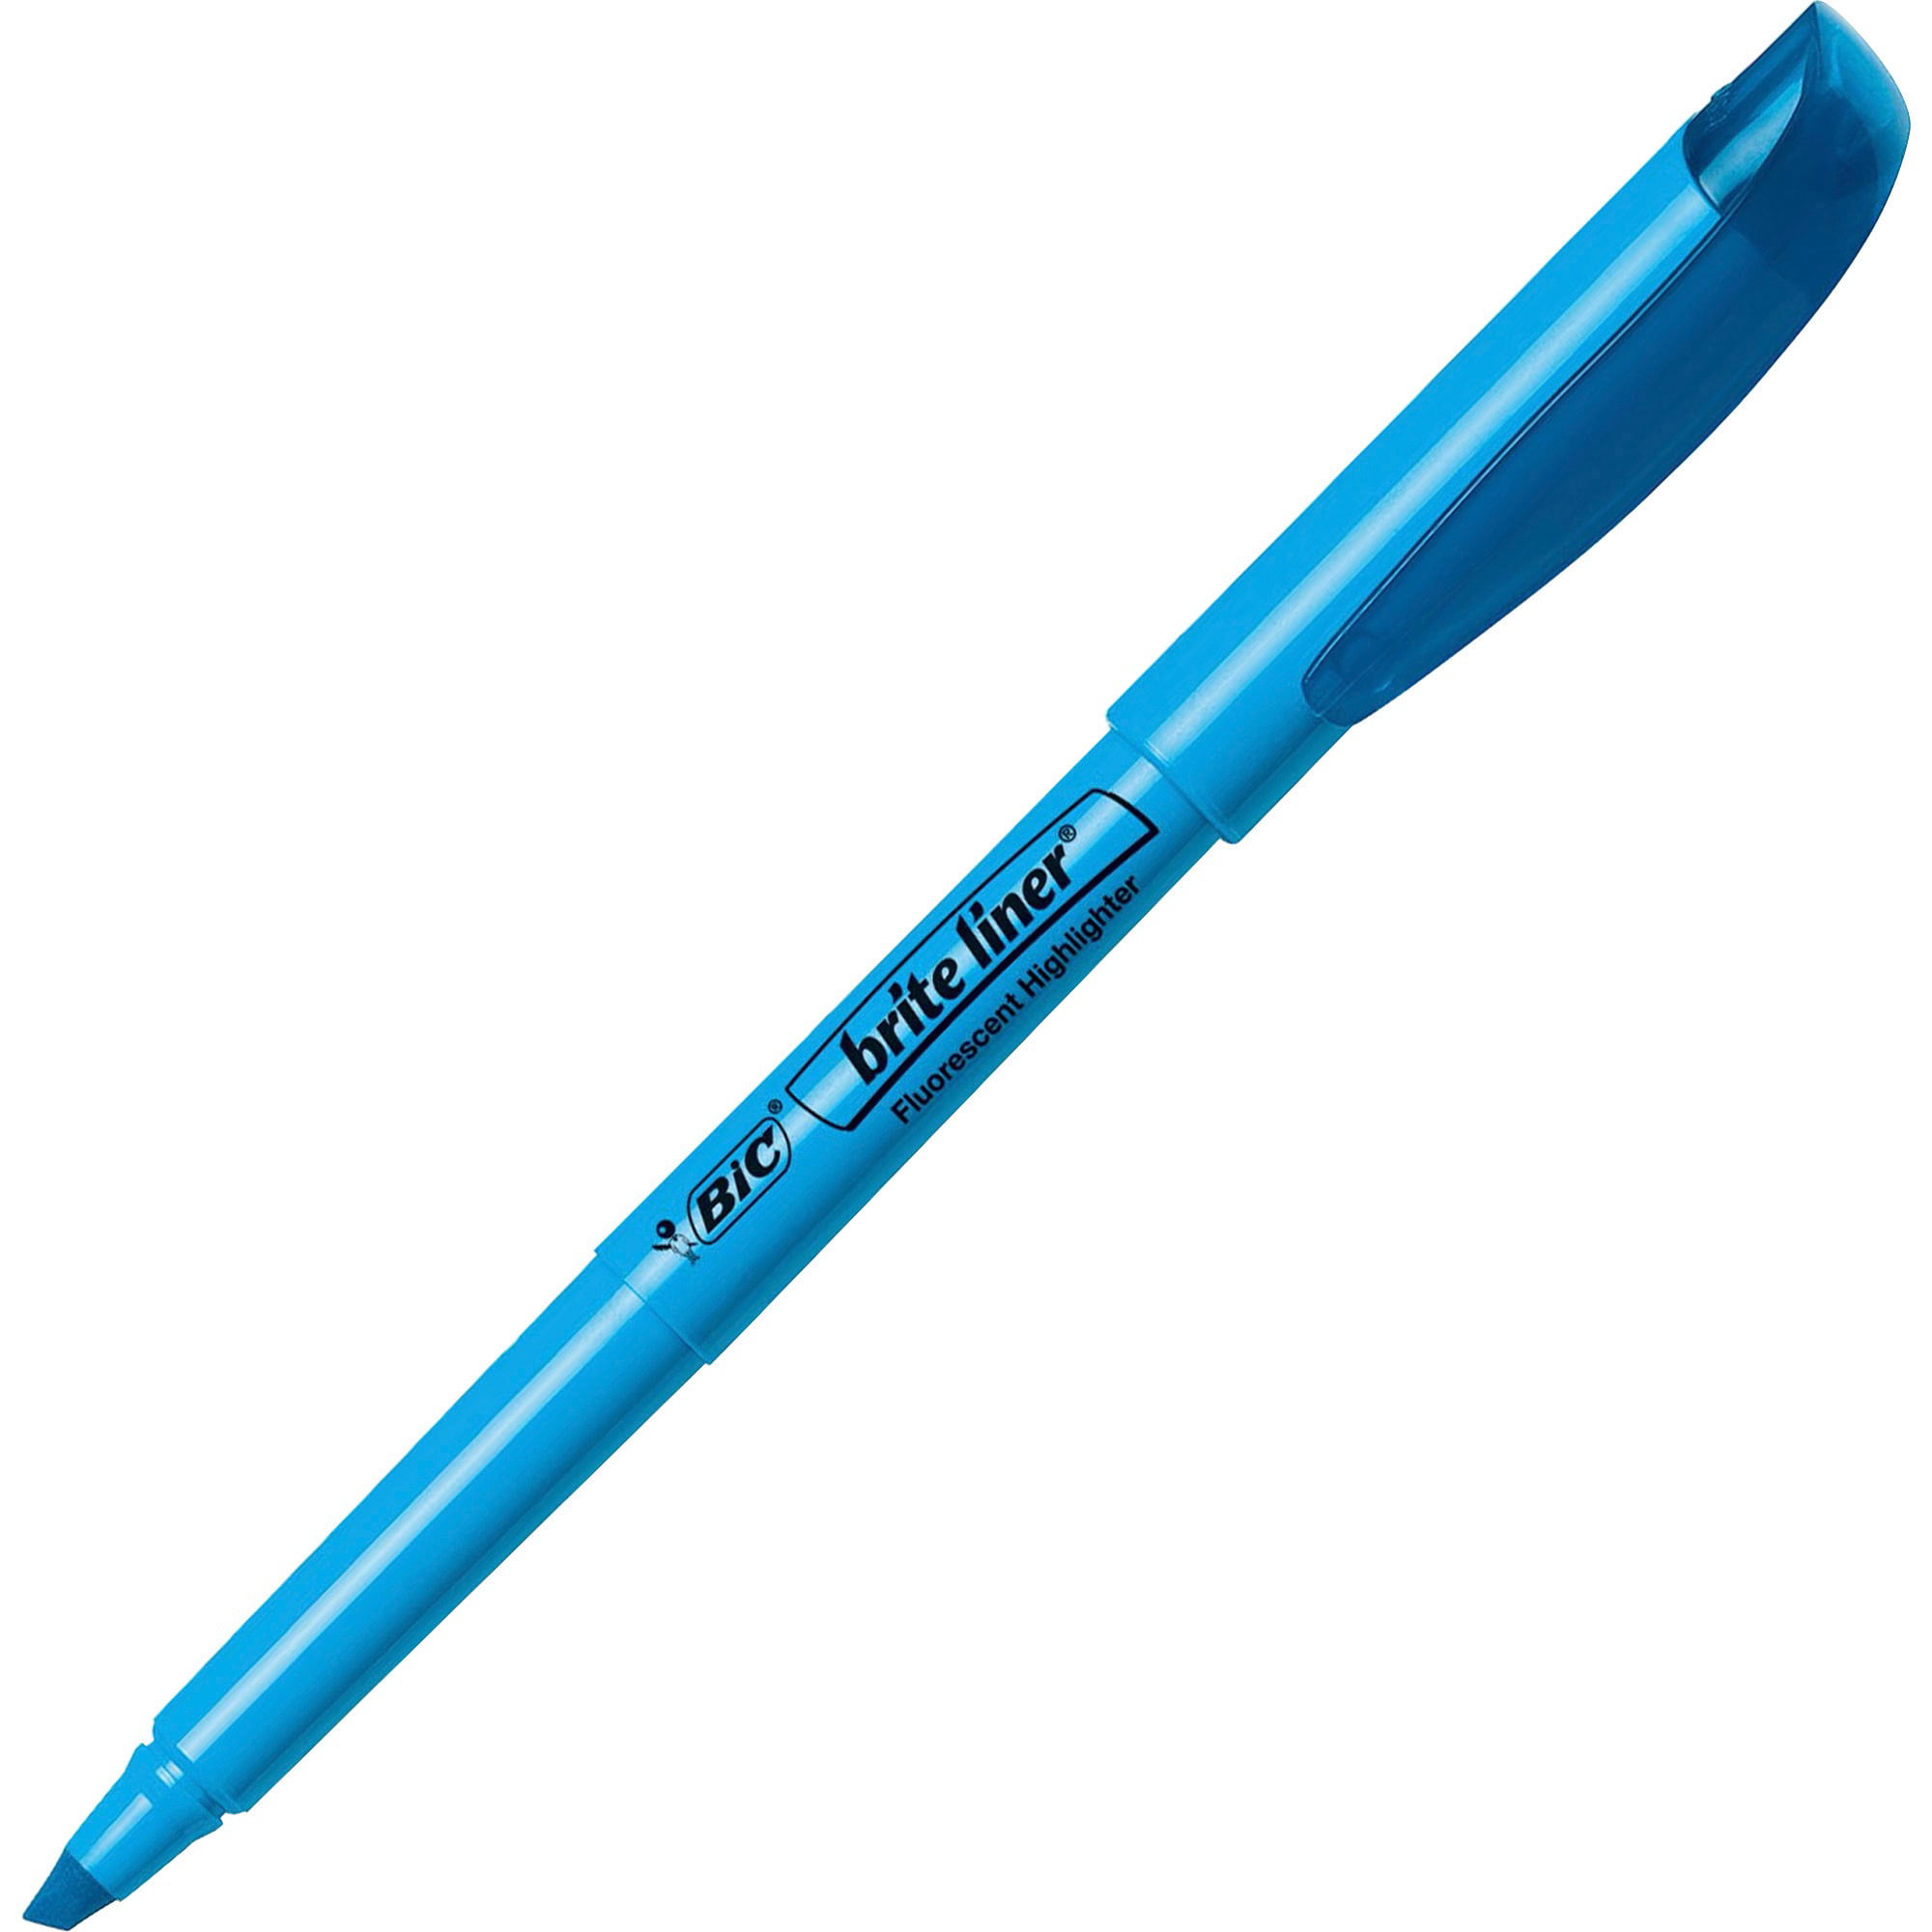 Highlighter Pen Giá Tốt T09/2023 | Mua tại Lazada.vn